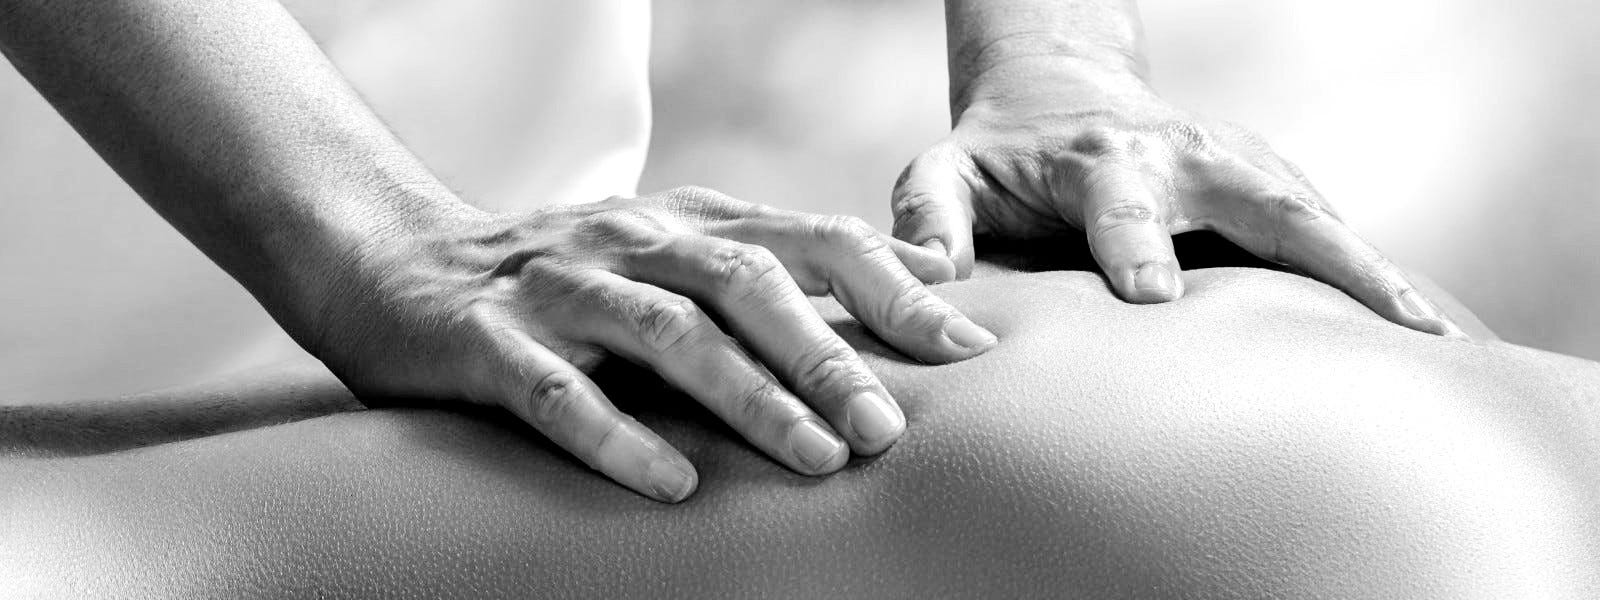 Tracking Arizona massage therapists accused of sexual misconduct